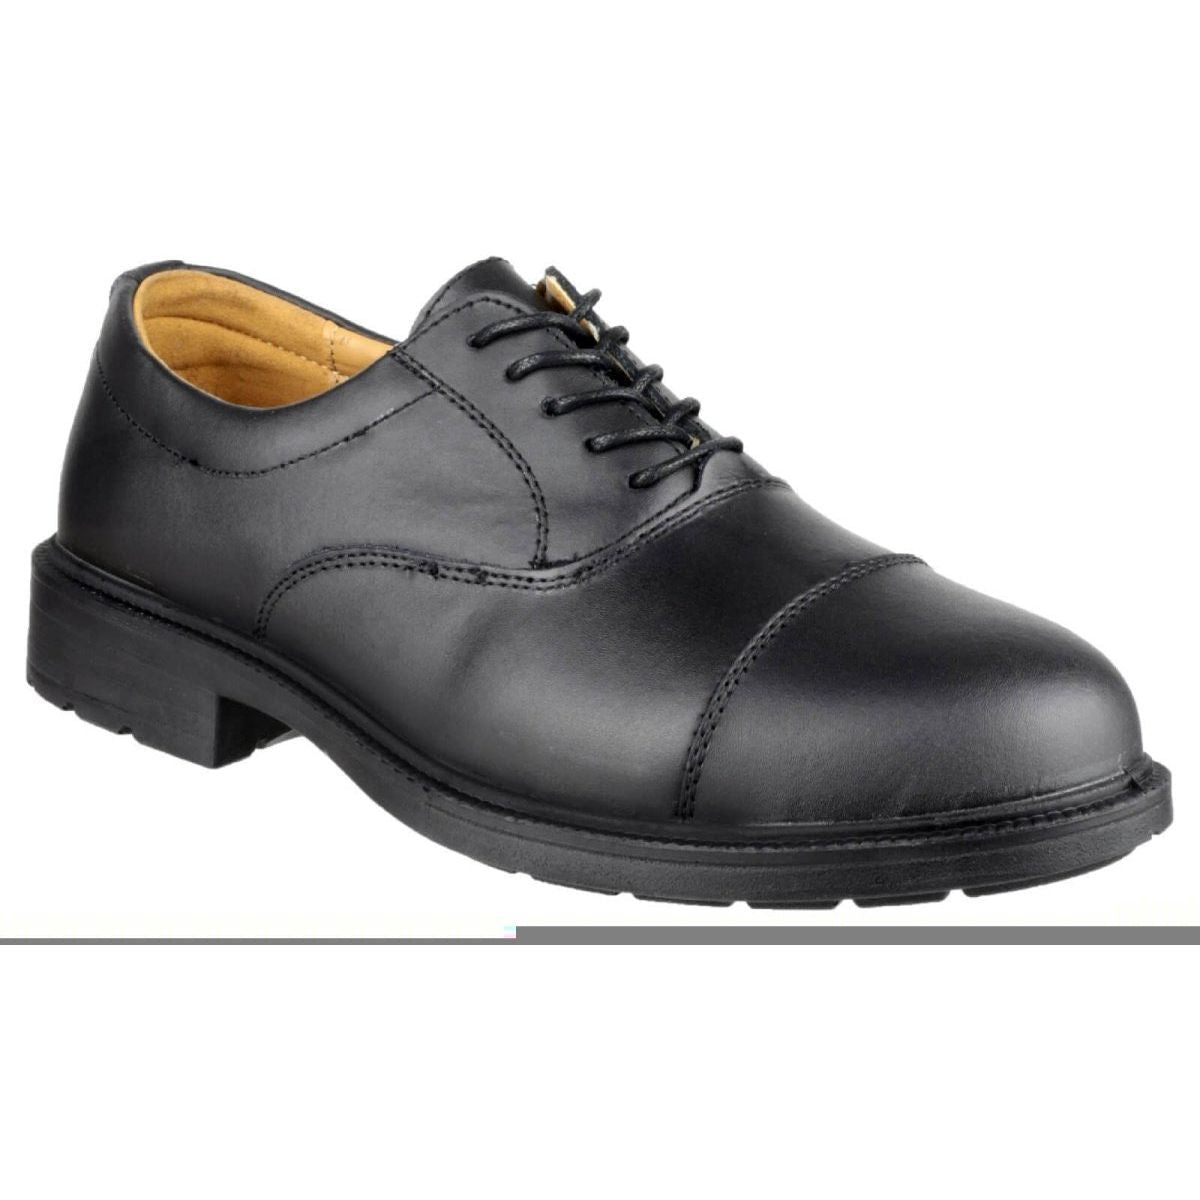 Amblers Fs43 Work Safety Shoes Mens - workweargurus.com